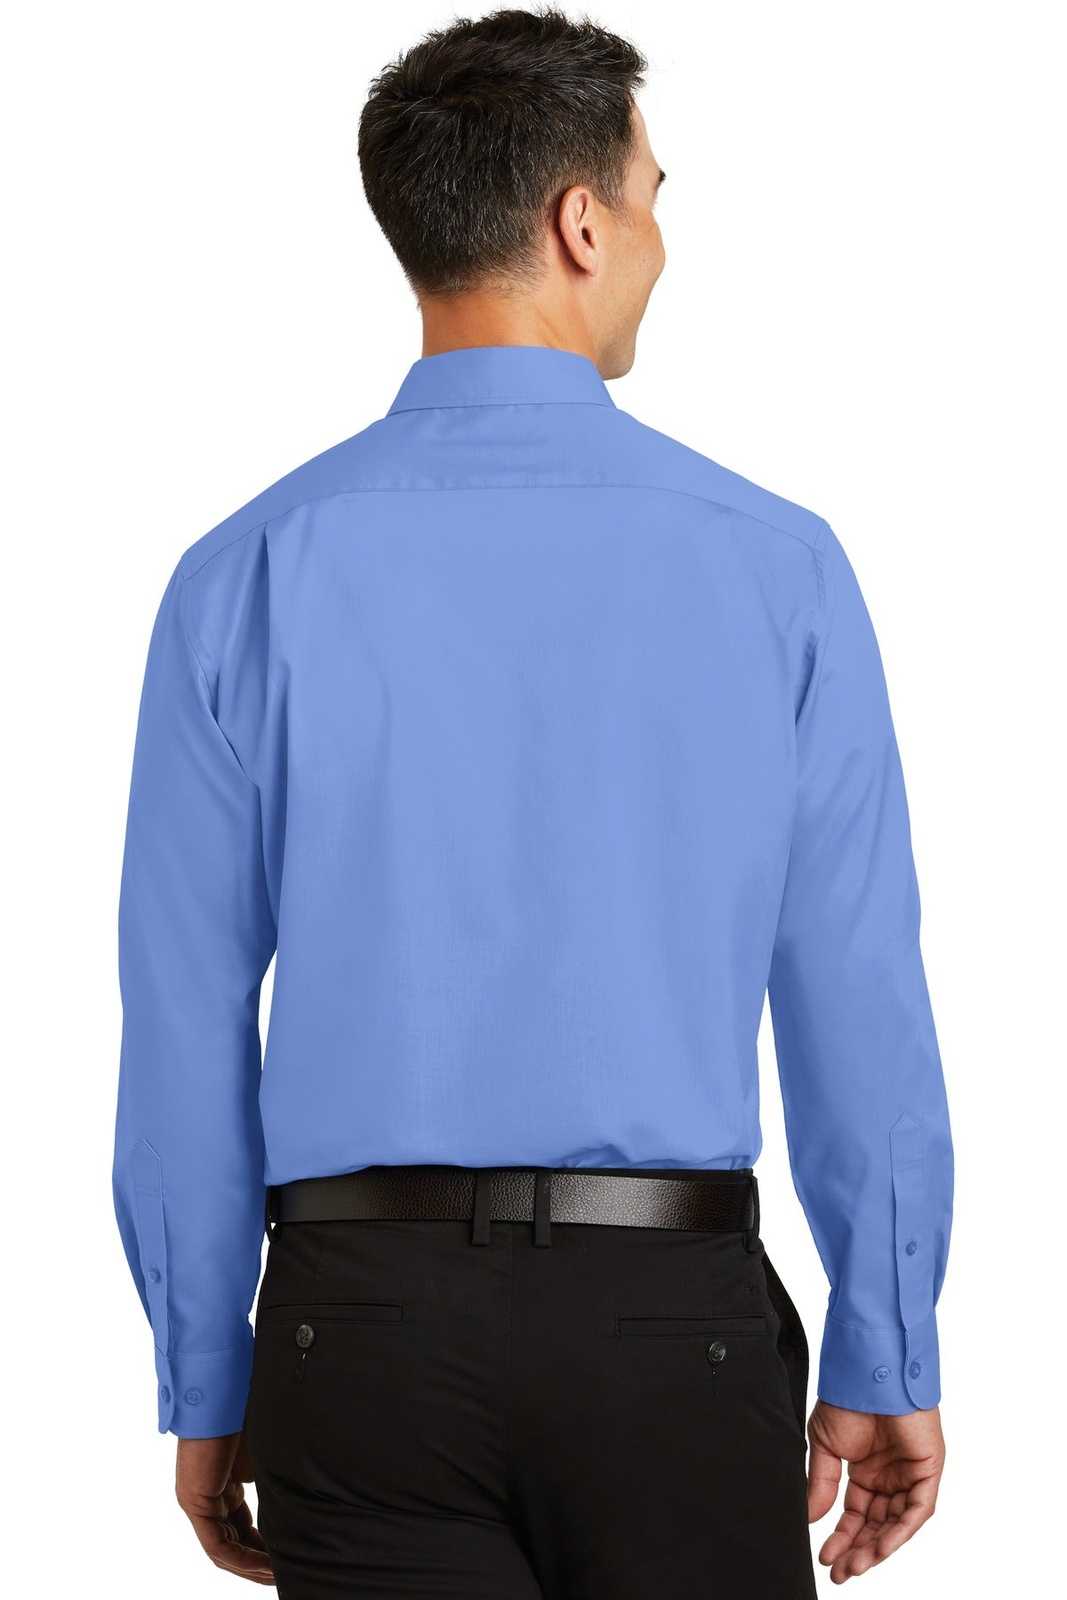 Port Authority S663 Superpro Twill Shirt - Ultramarine Blue - HIT a Double - 1